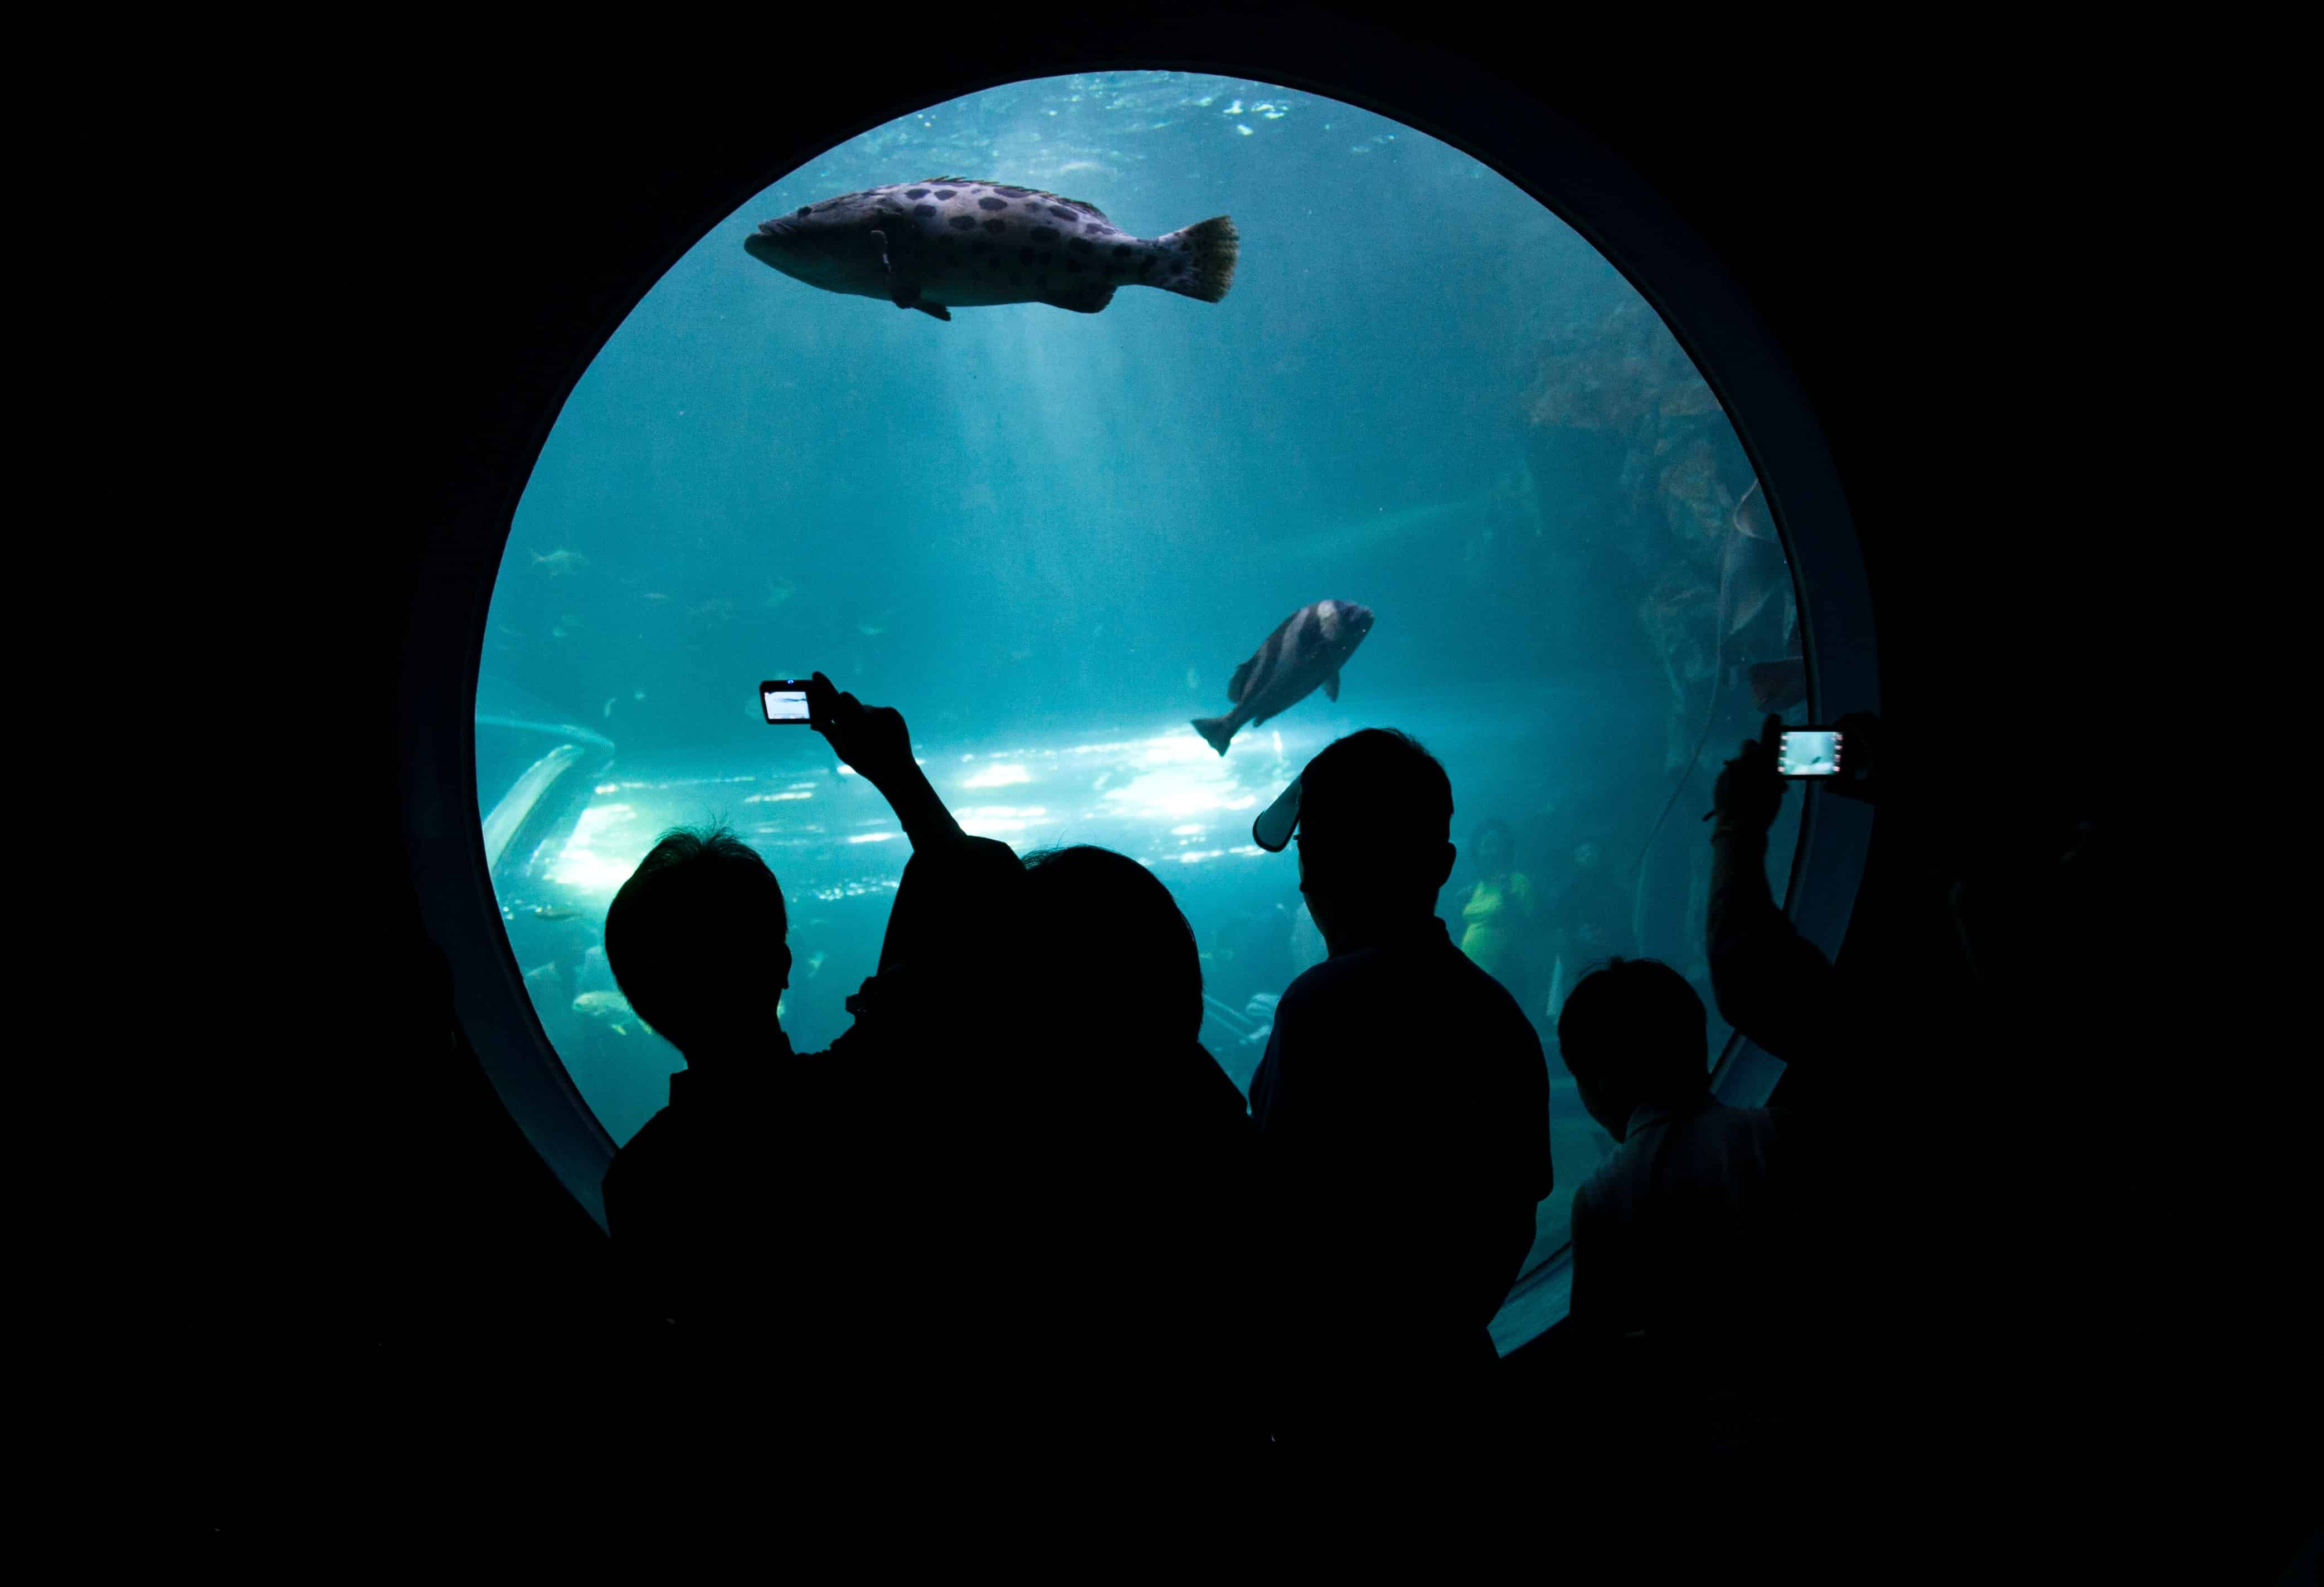 Students on a field trip at an aquarium